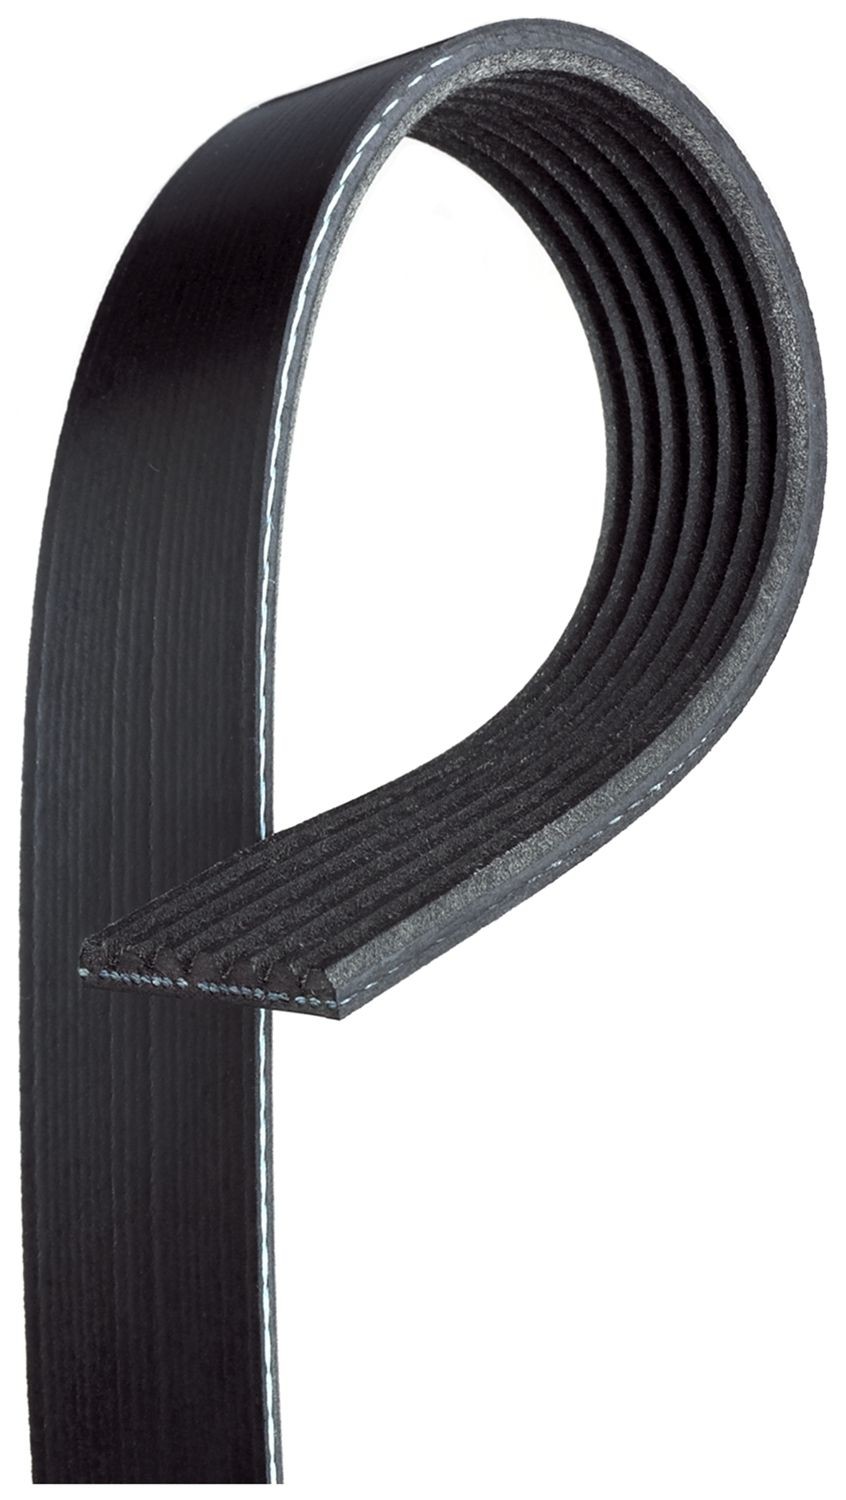 GATES 7PK1870 Serpentine belt 1870mm, 7, G-Force™ C12™ CVT Belt